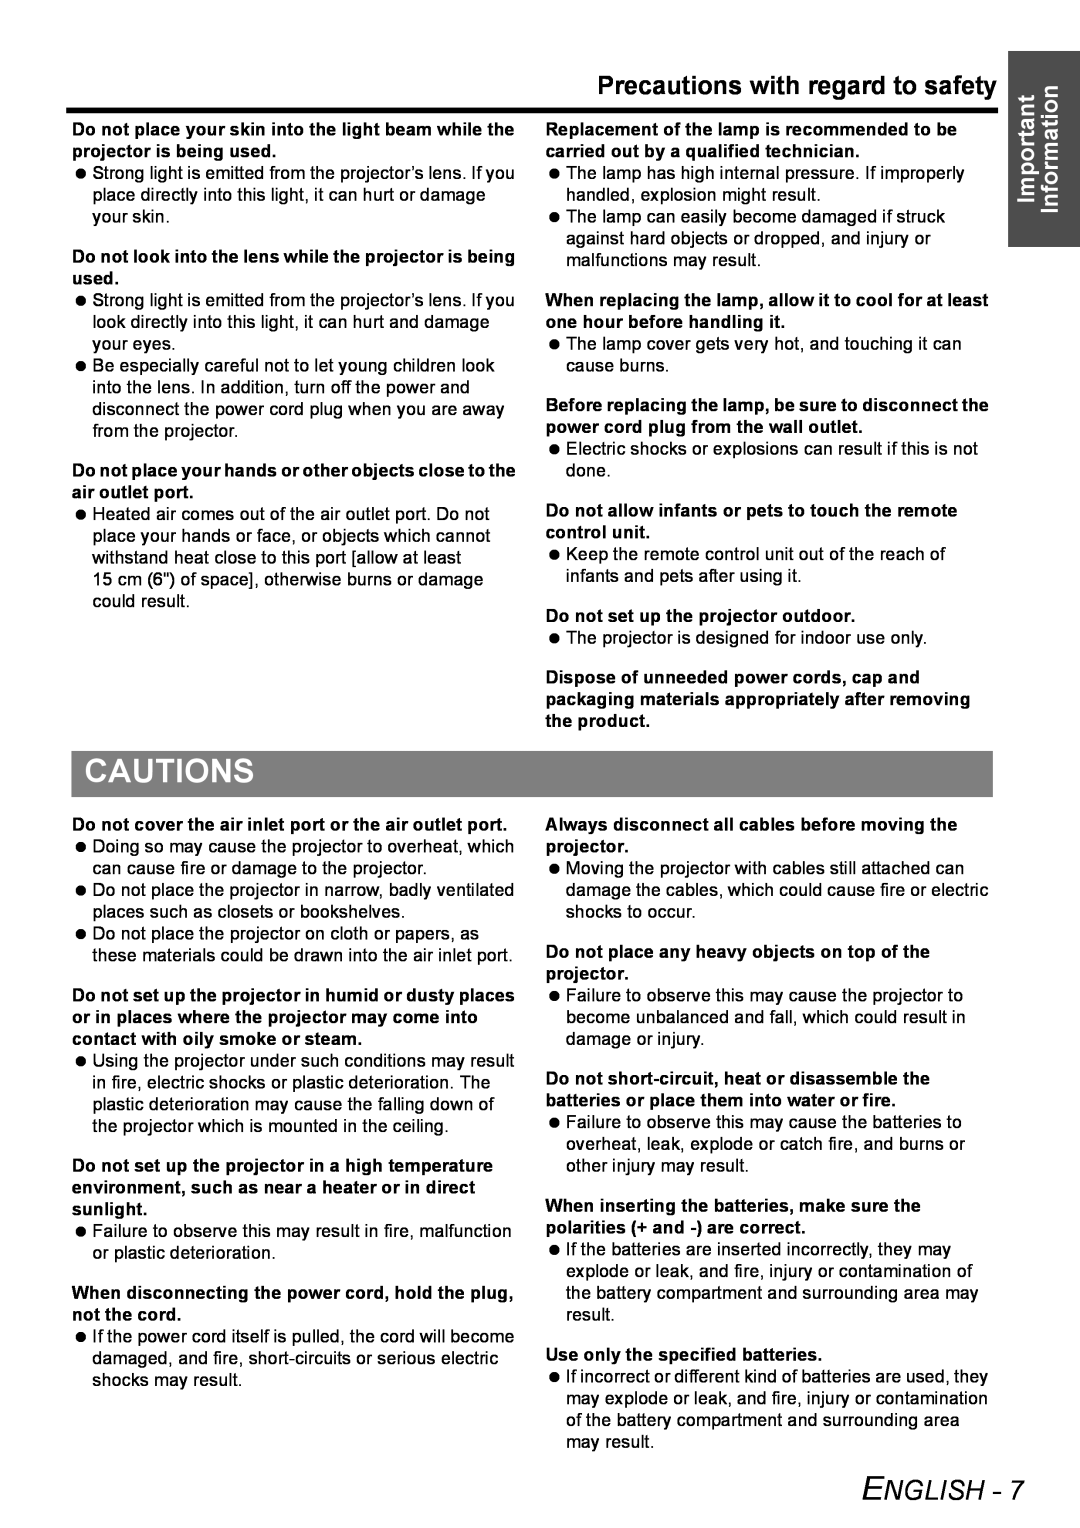 Panasonic PT-LB51NTU operating instructions Cautions, Precautions with regard to safety, English 